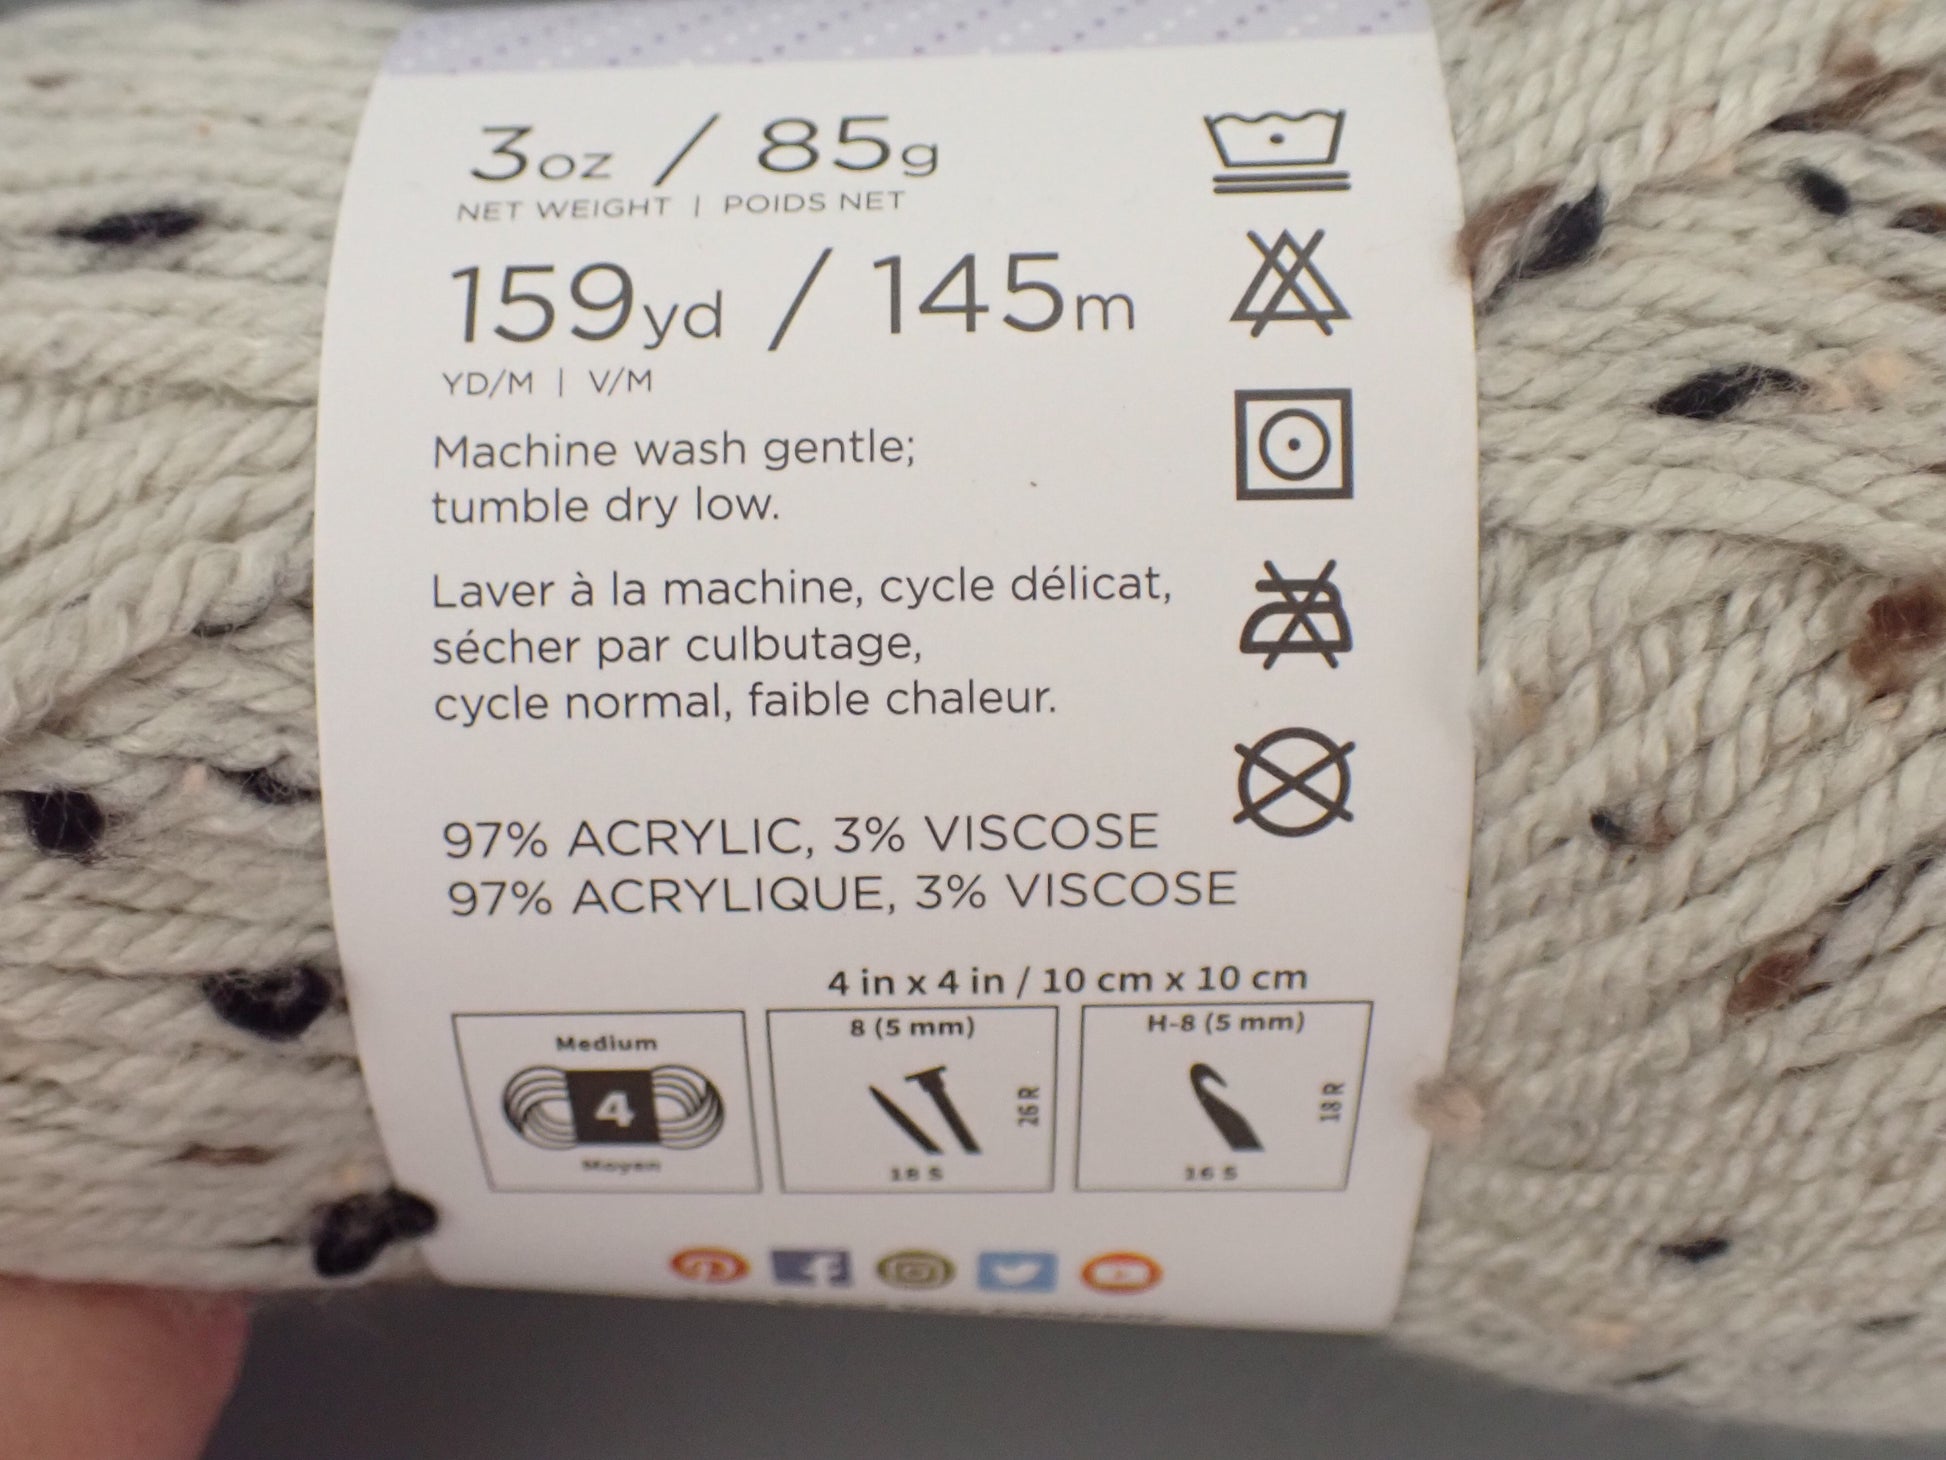 Lion Brand Basic Stitch Anti-Pilling Yarn-Almond Tweed